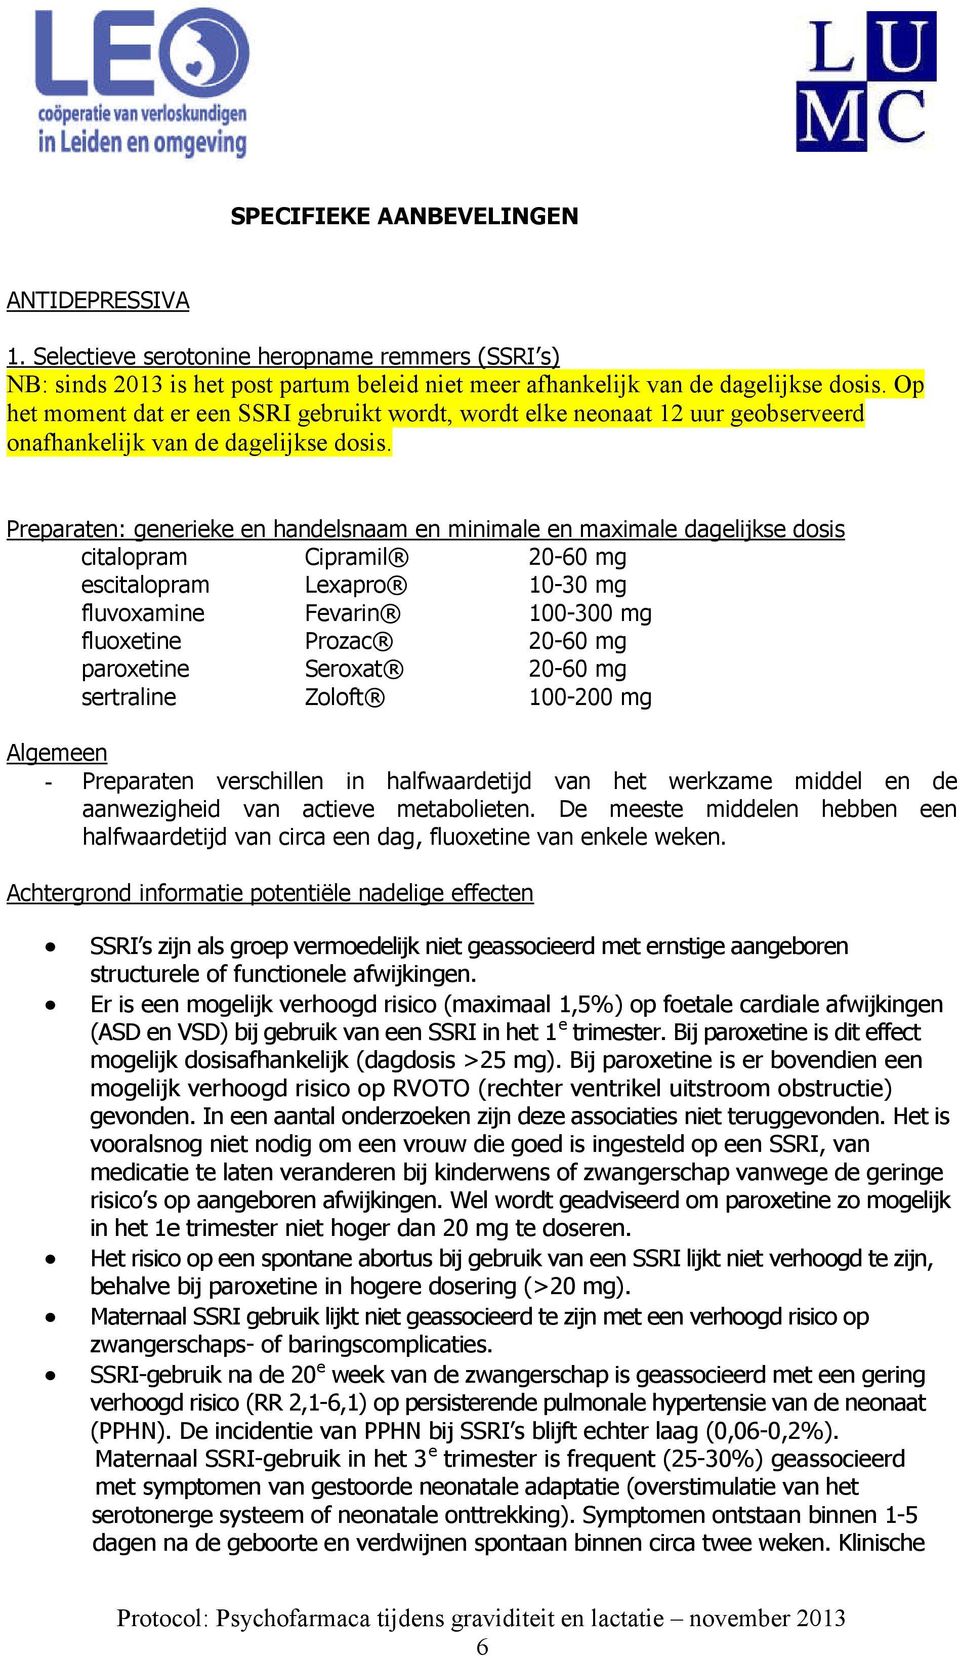 Preparaten: generieke en handelsnaam en minimale en maximale dagelijkse dosis citalopram Cipramil 20-60 mg escitalopram Lexapro 10-30 mg fluvoxamine Fevarin 100-300 mg fluoxetine Prozac 20-60 mg